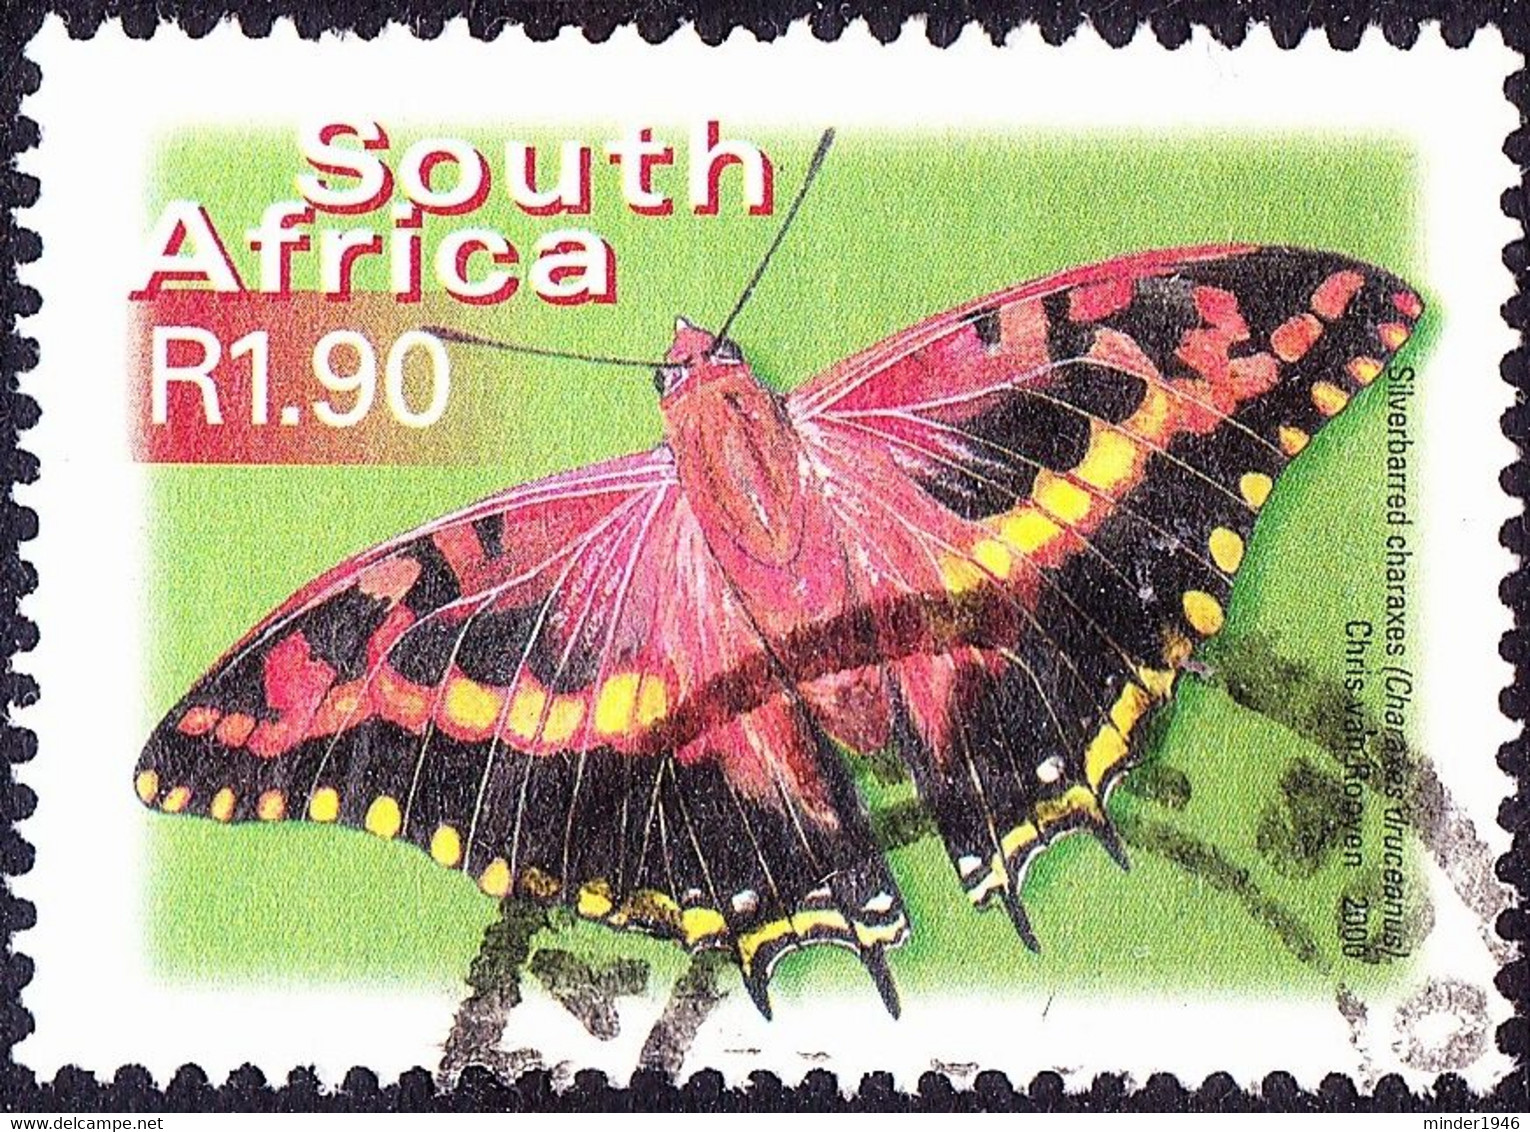 SOUTH AFRICA  2000 1.90R Multicoloured, Fauna & Flora - Butterflies SG1224 FU - Oblitérés